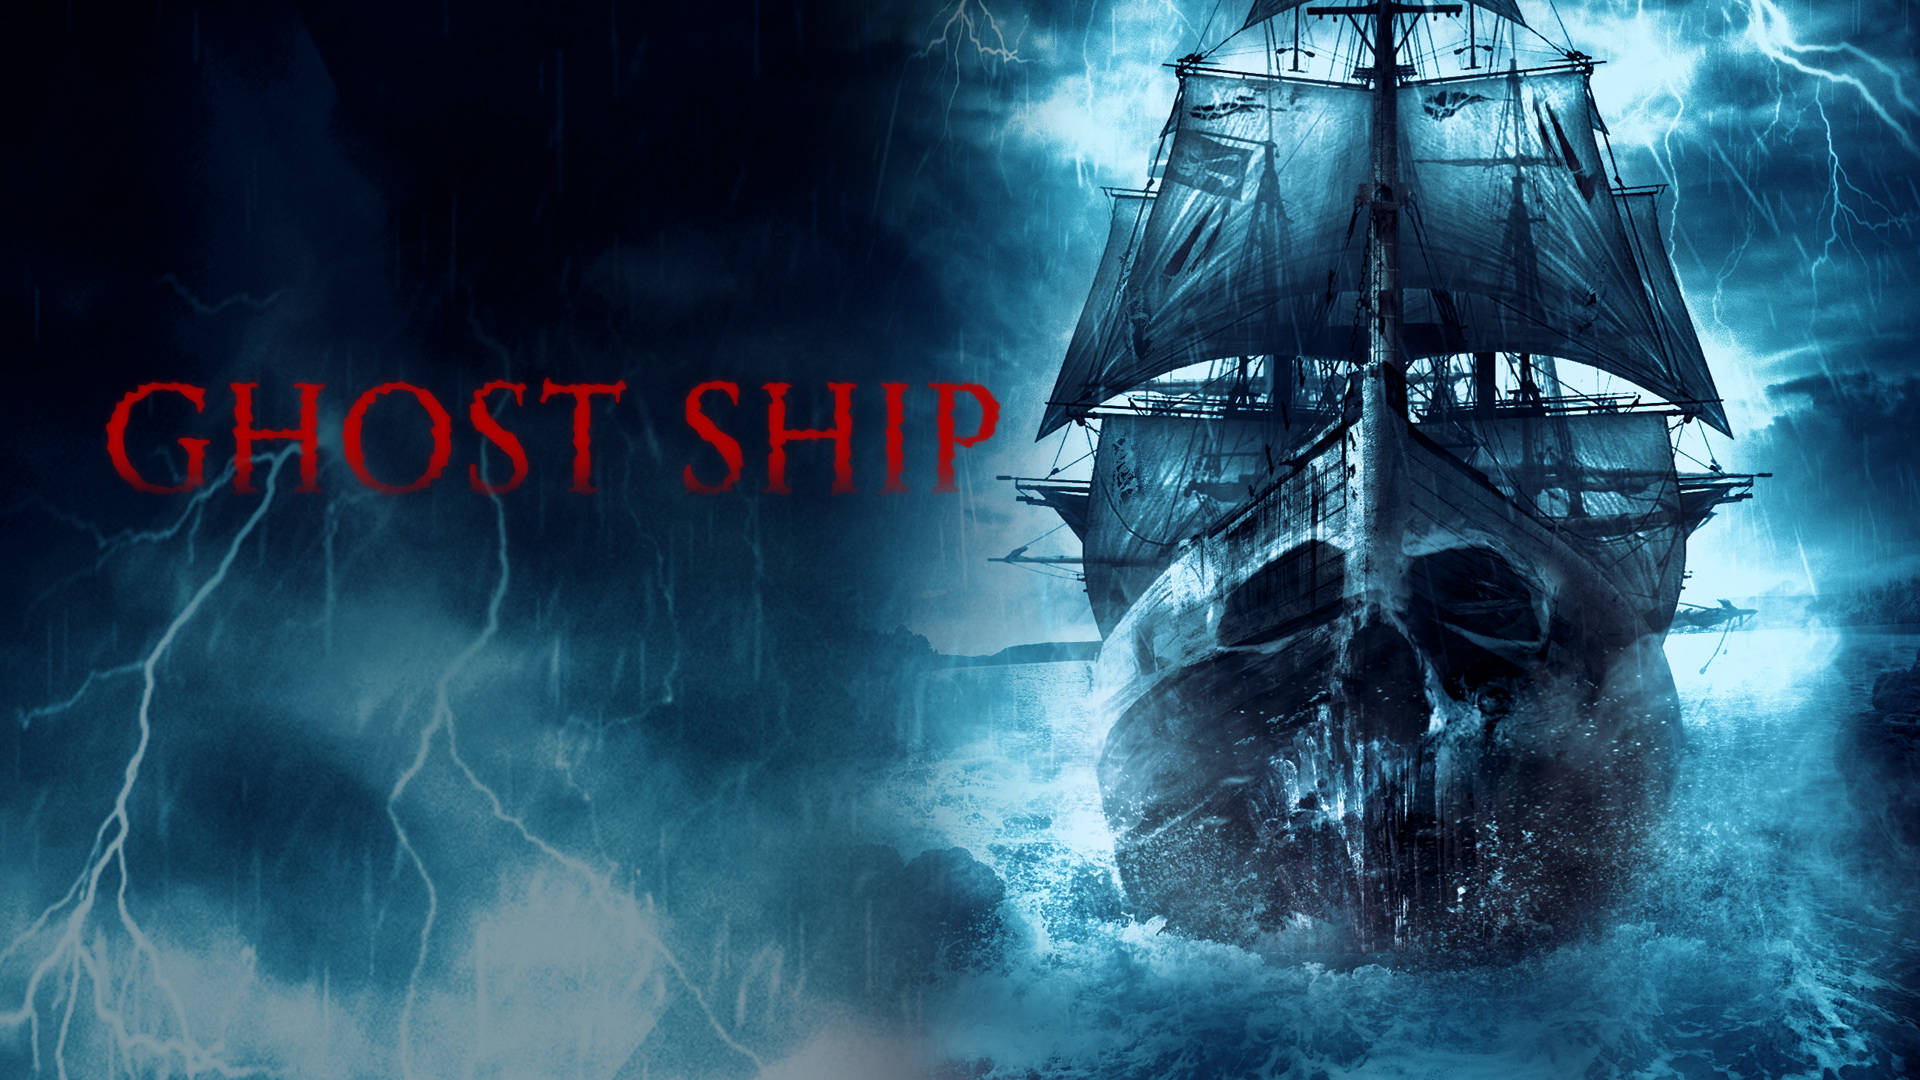 Ghost Ship Horror Movie Poster Wallpaper